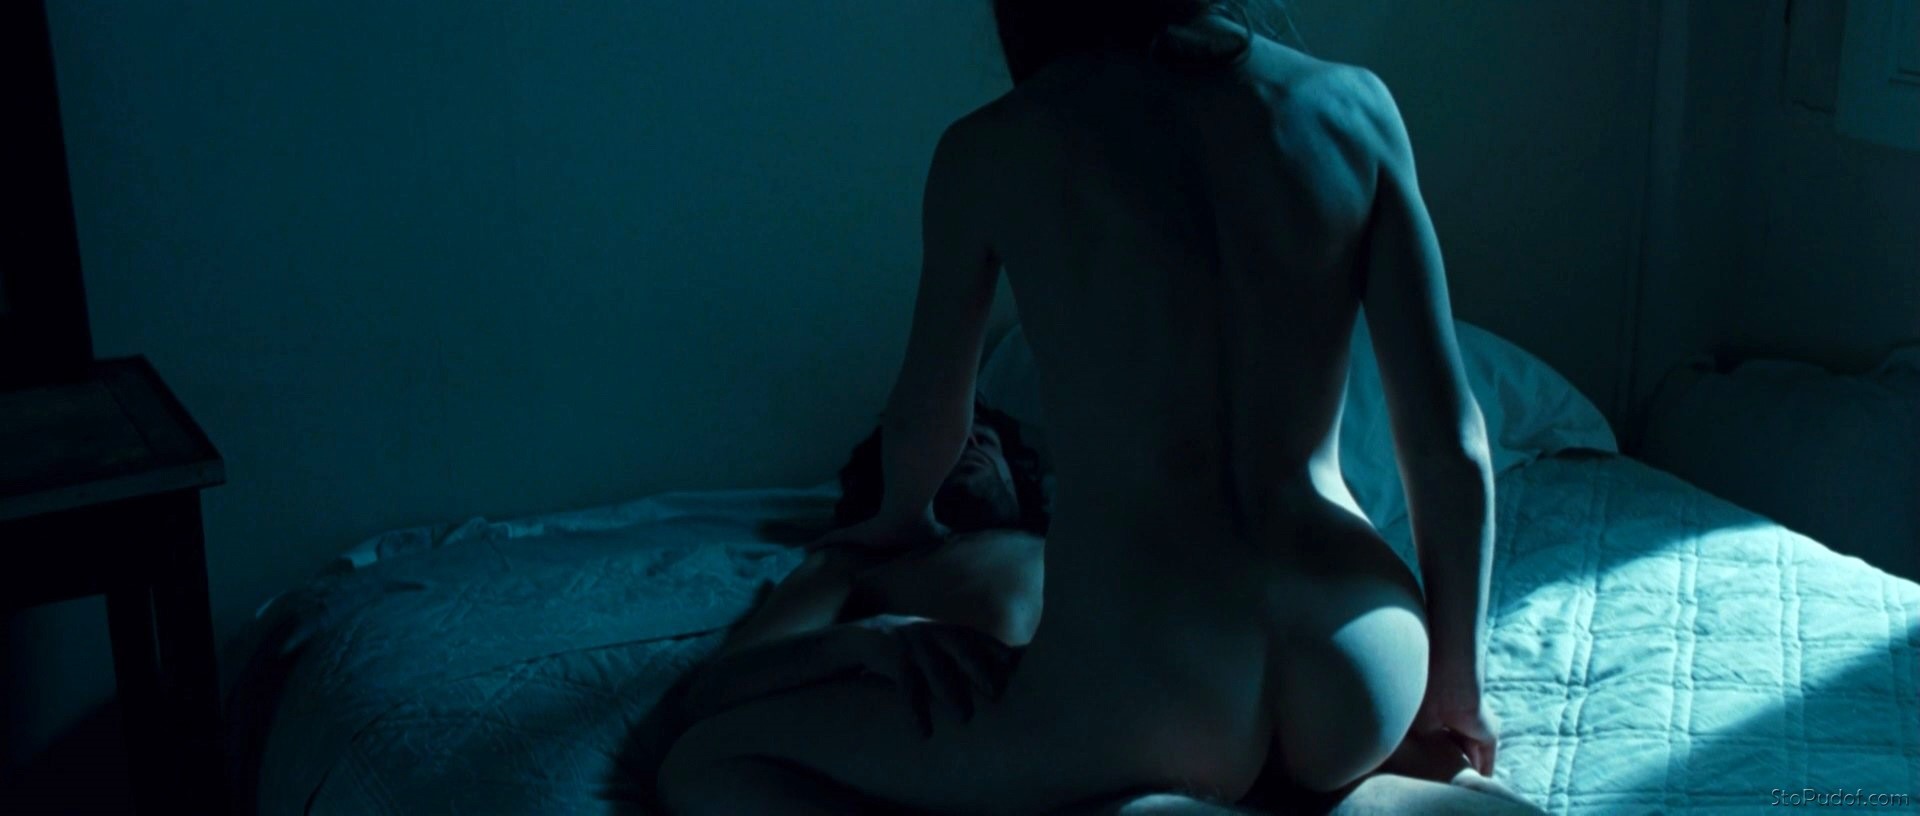 Charlotte Gainsbourg nude photo icloud - UkPhotoSafari